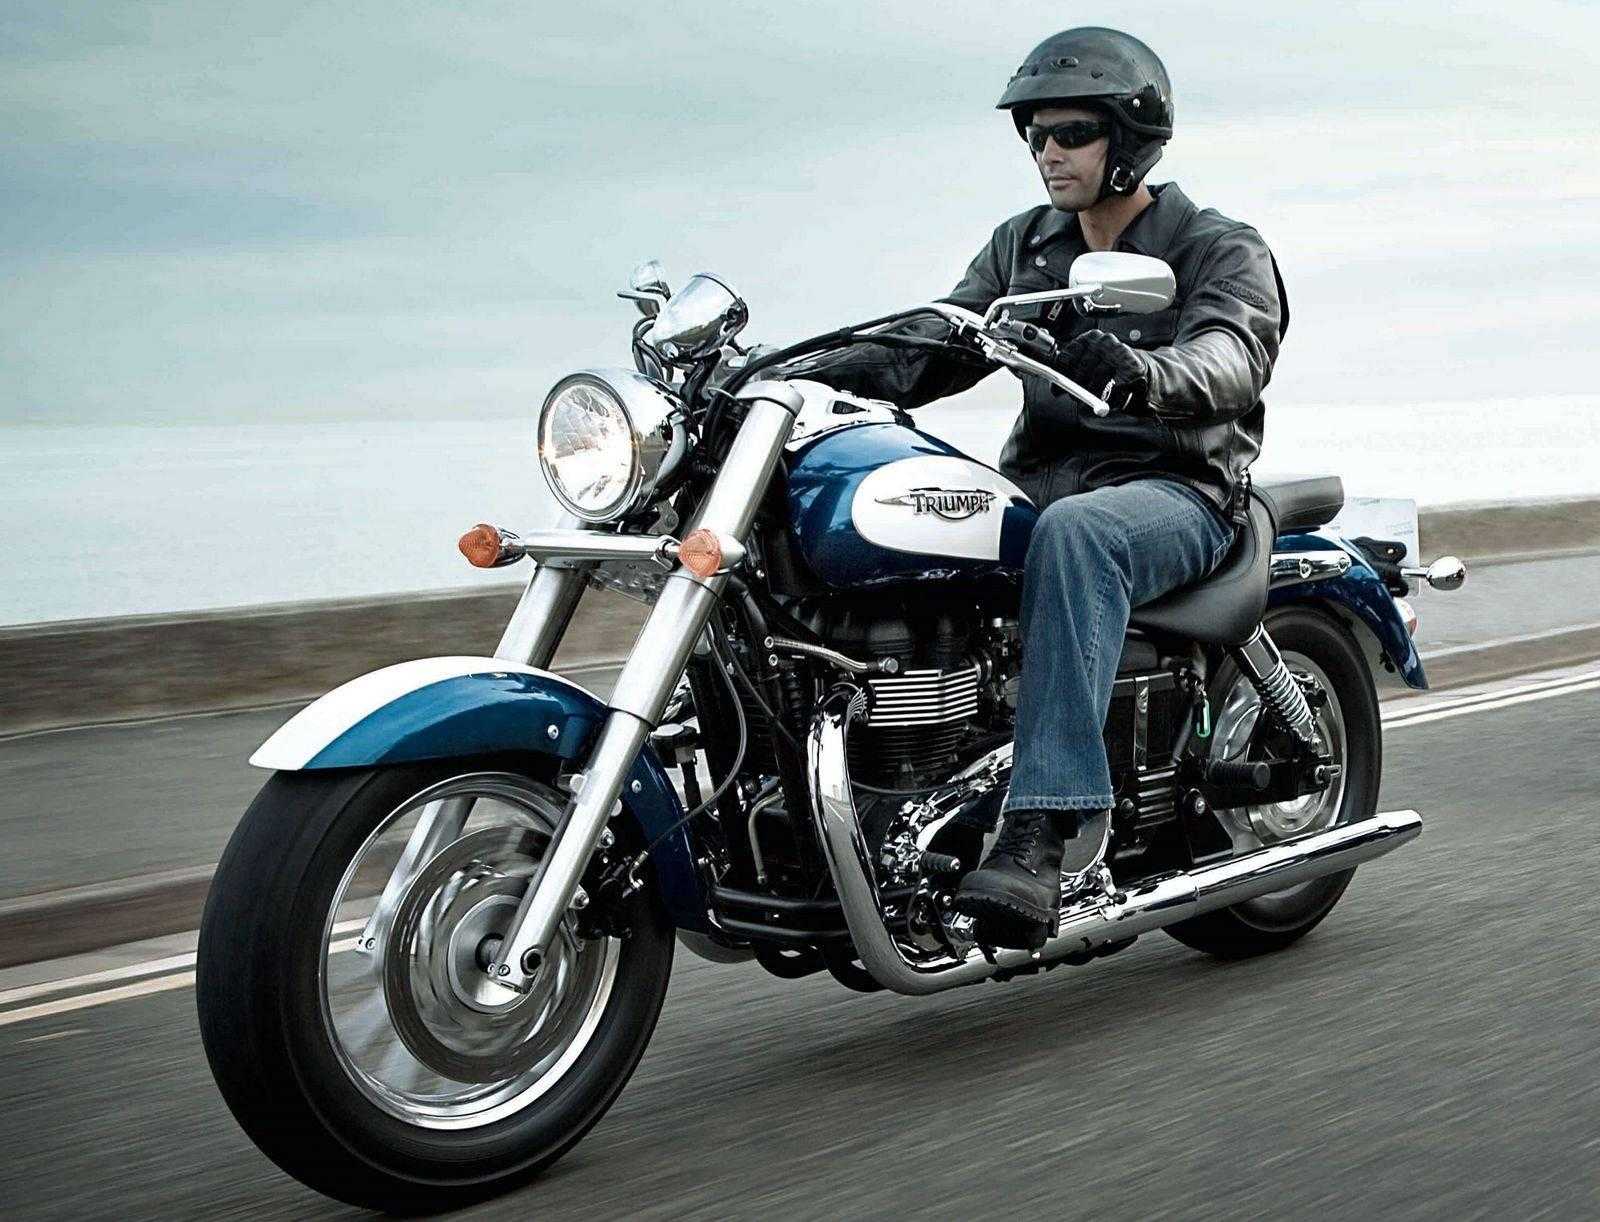 Мотоциклы triumph: фото, видео, стоимость, характеристики мотоциклов triumph